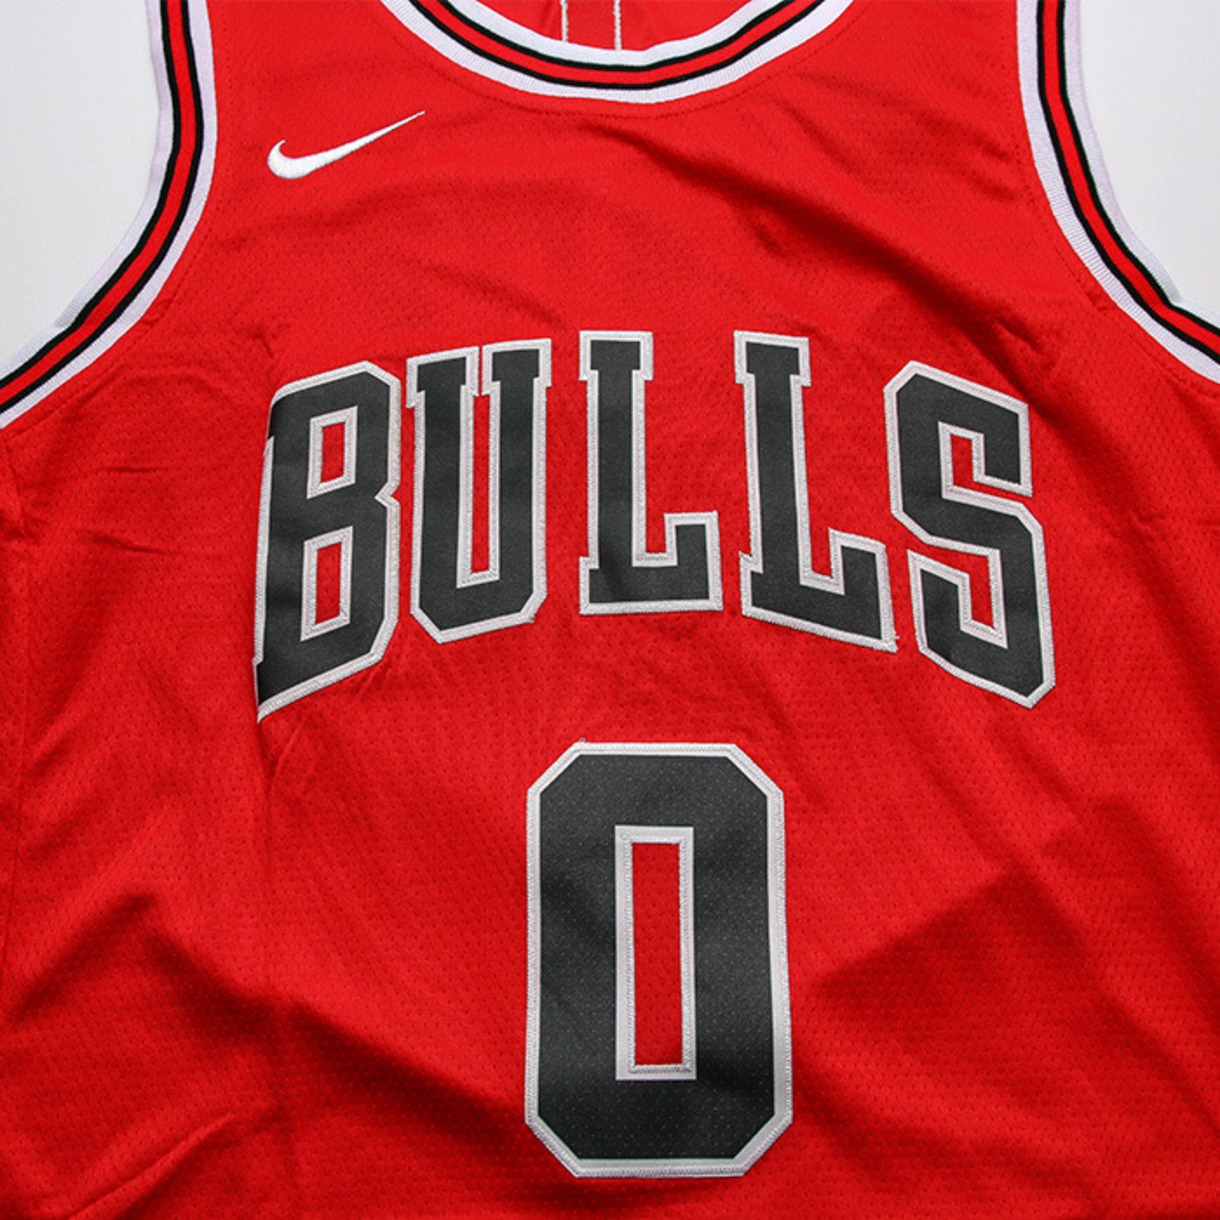 Nike Bulls White Jersey